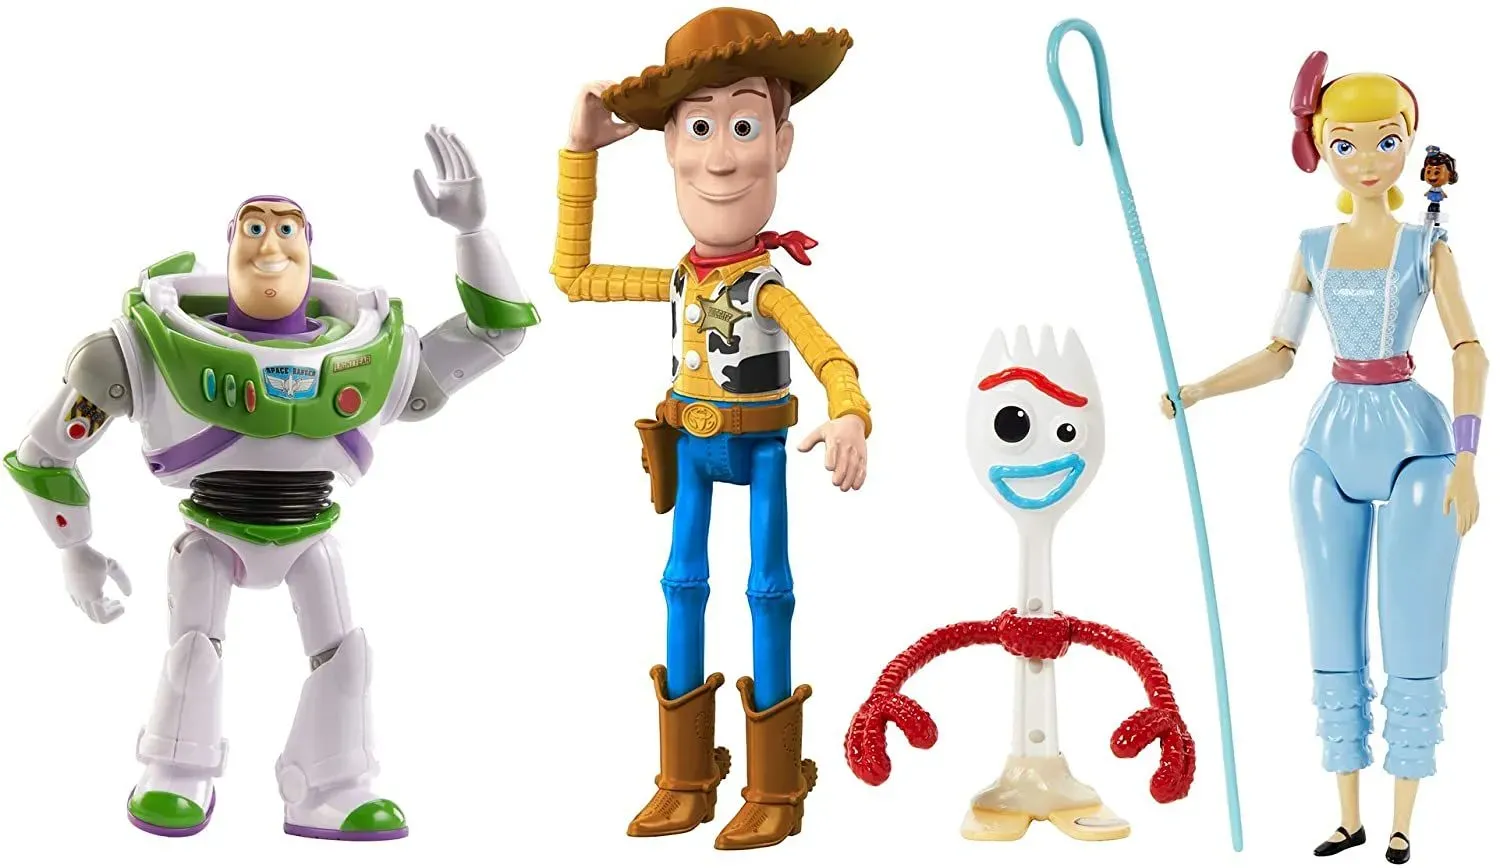 Disney Pixar Toy Story 4 Figures.